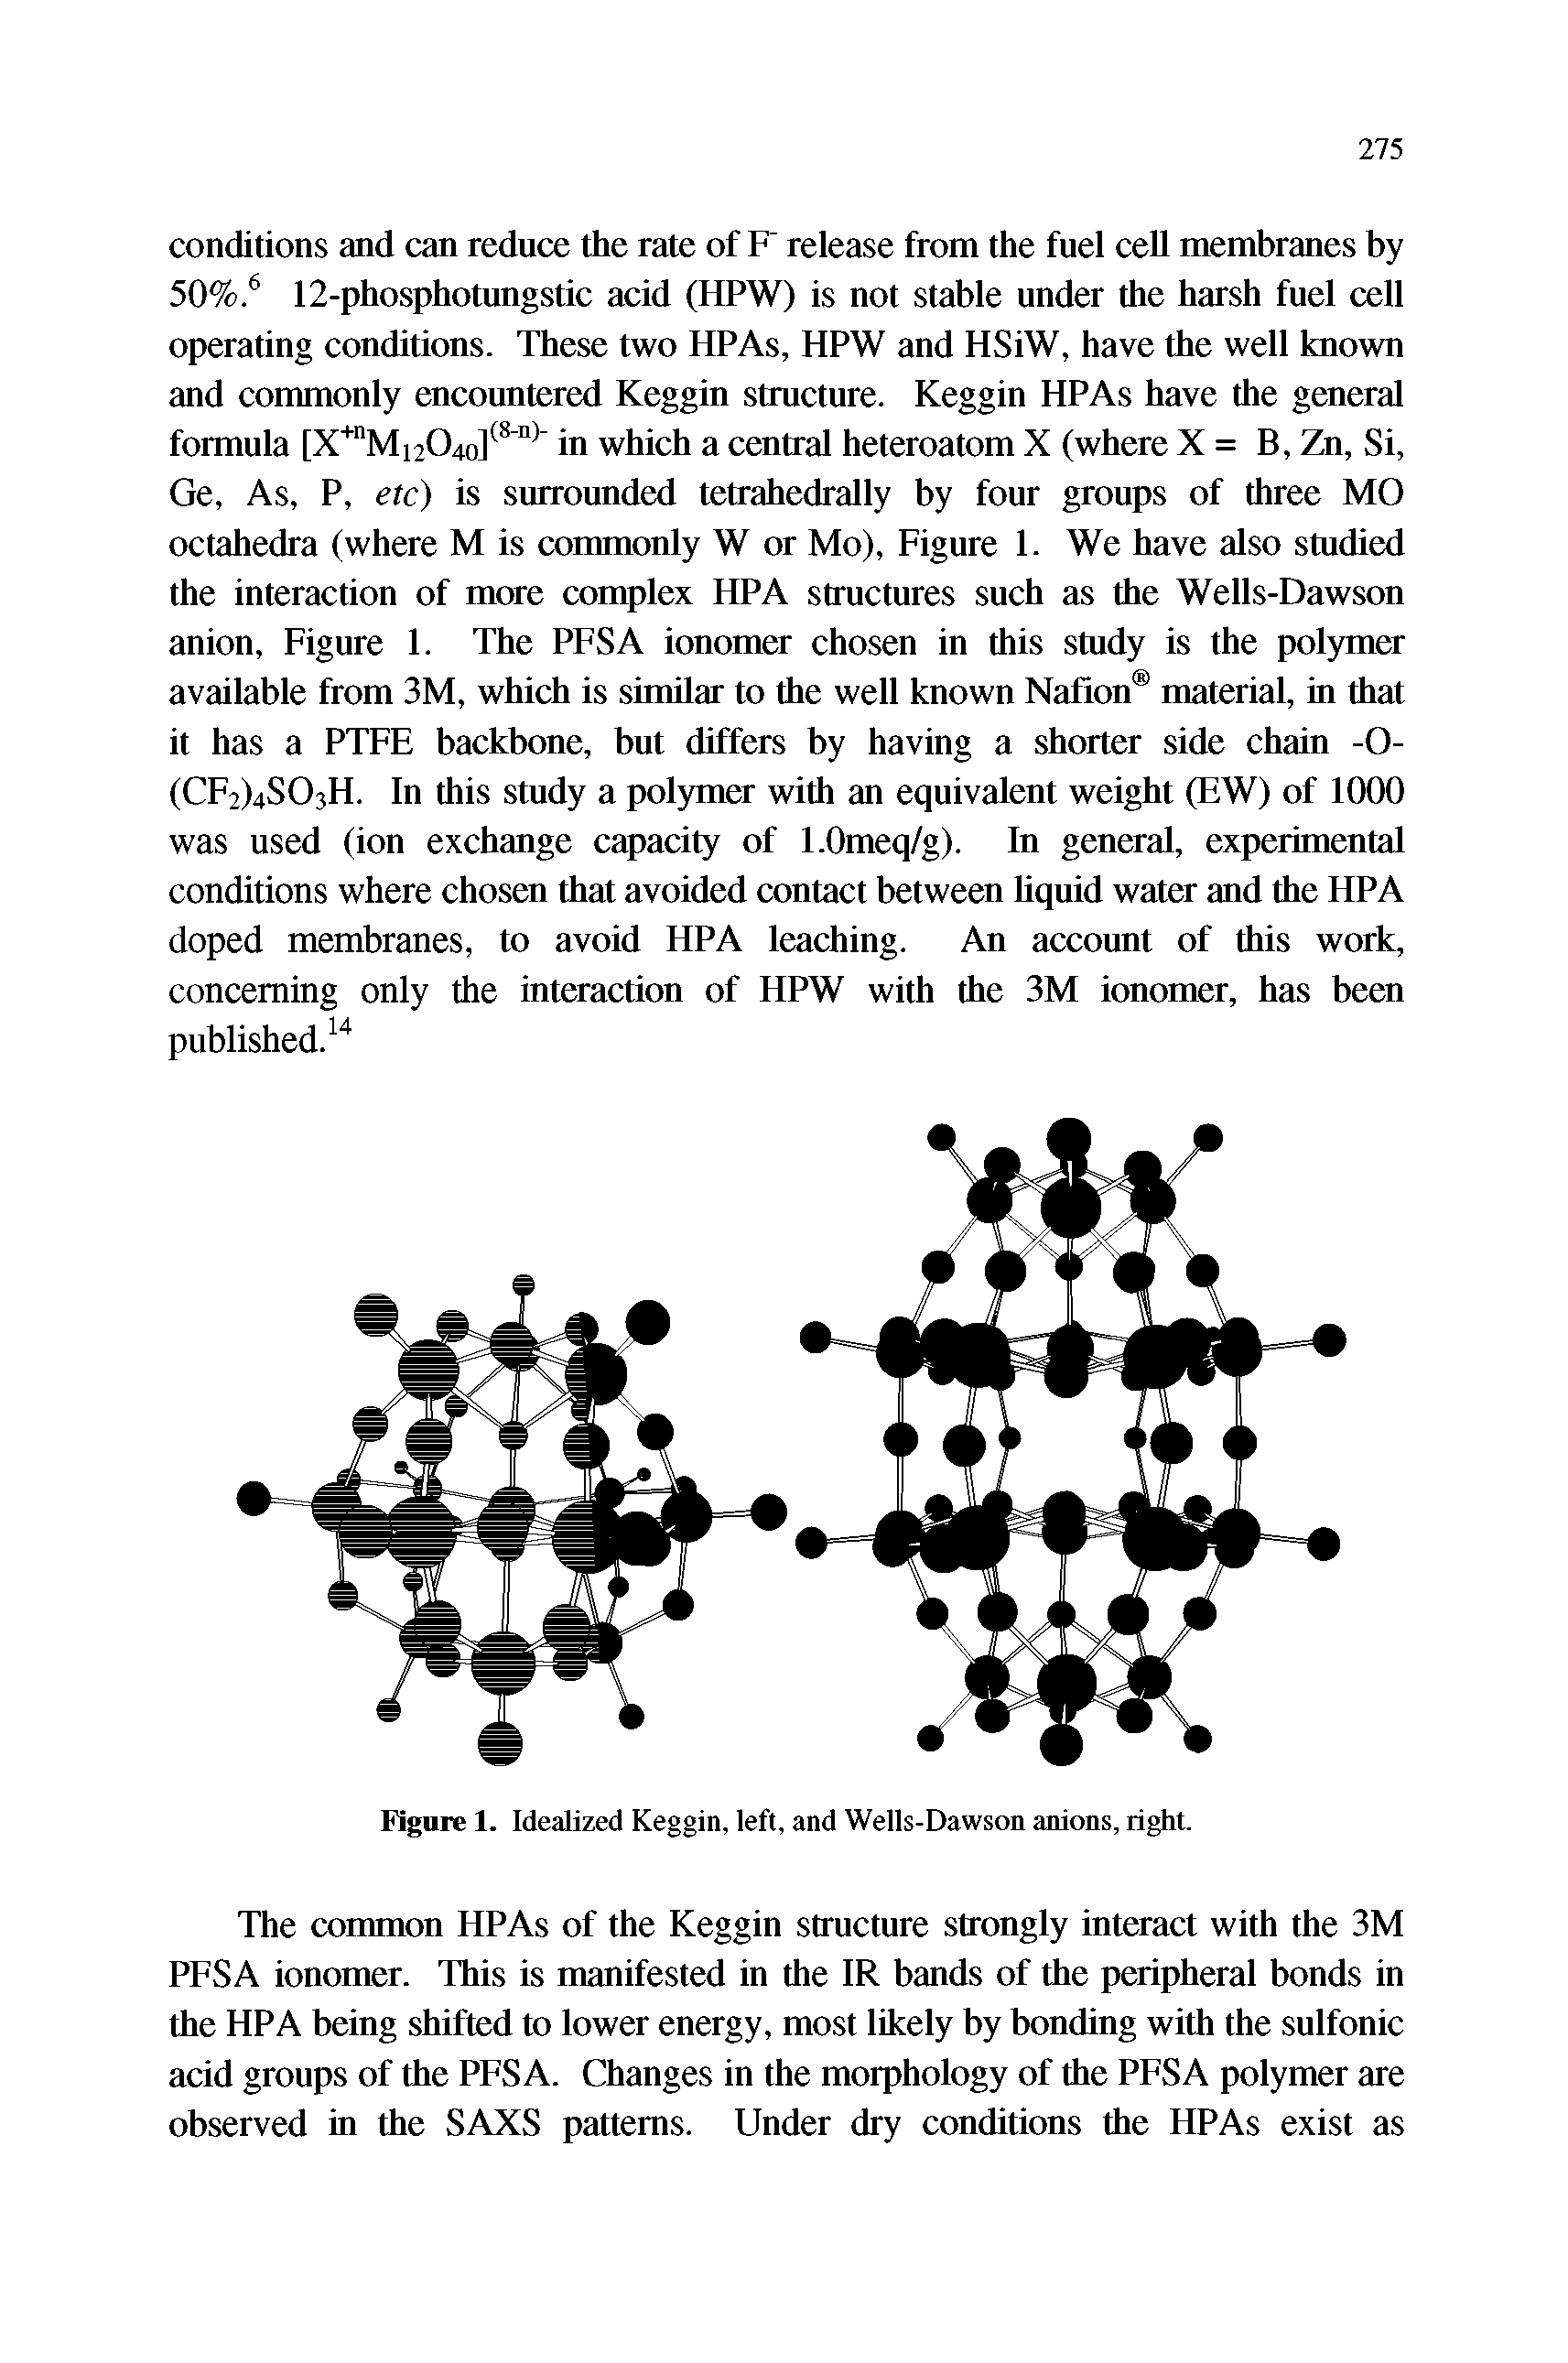 Figure 1. Idealized Keggin, left, and Wells-Dawson anions, right.